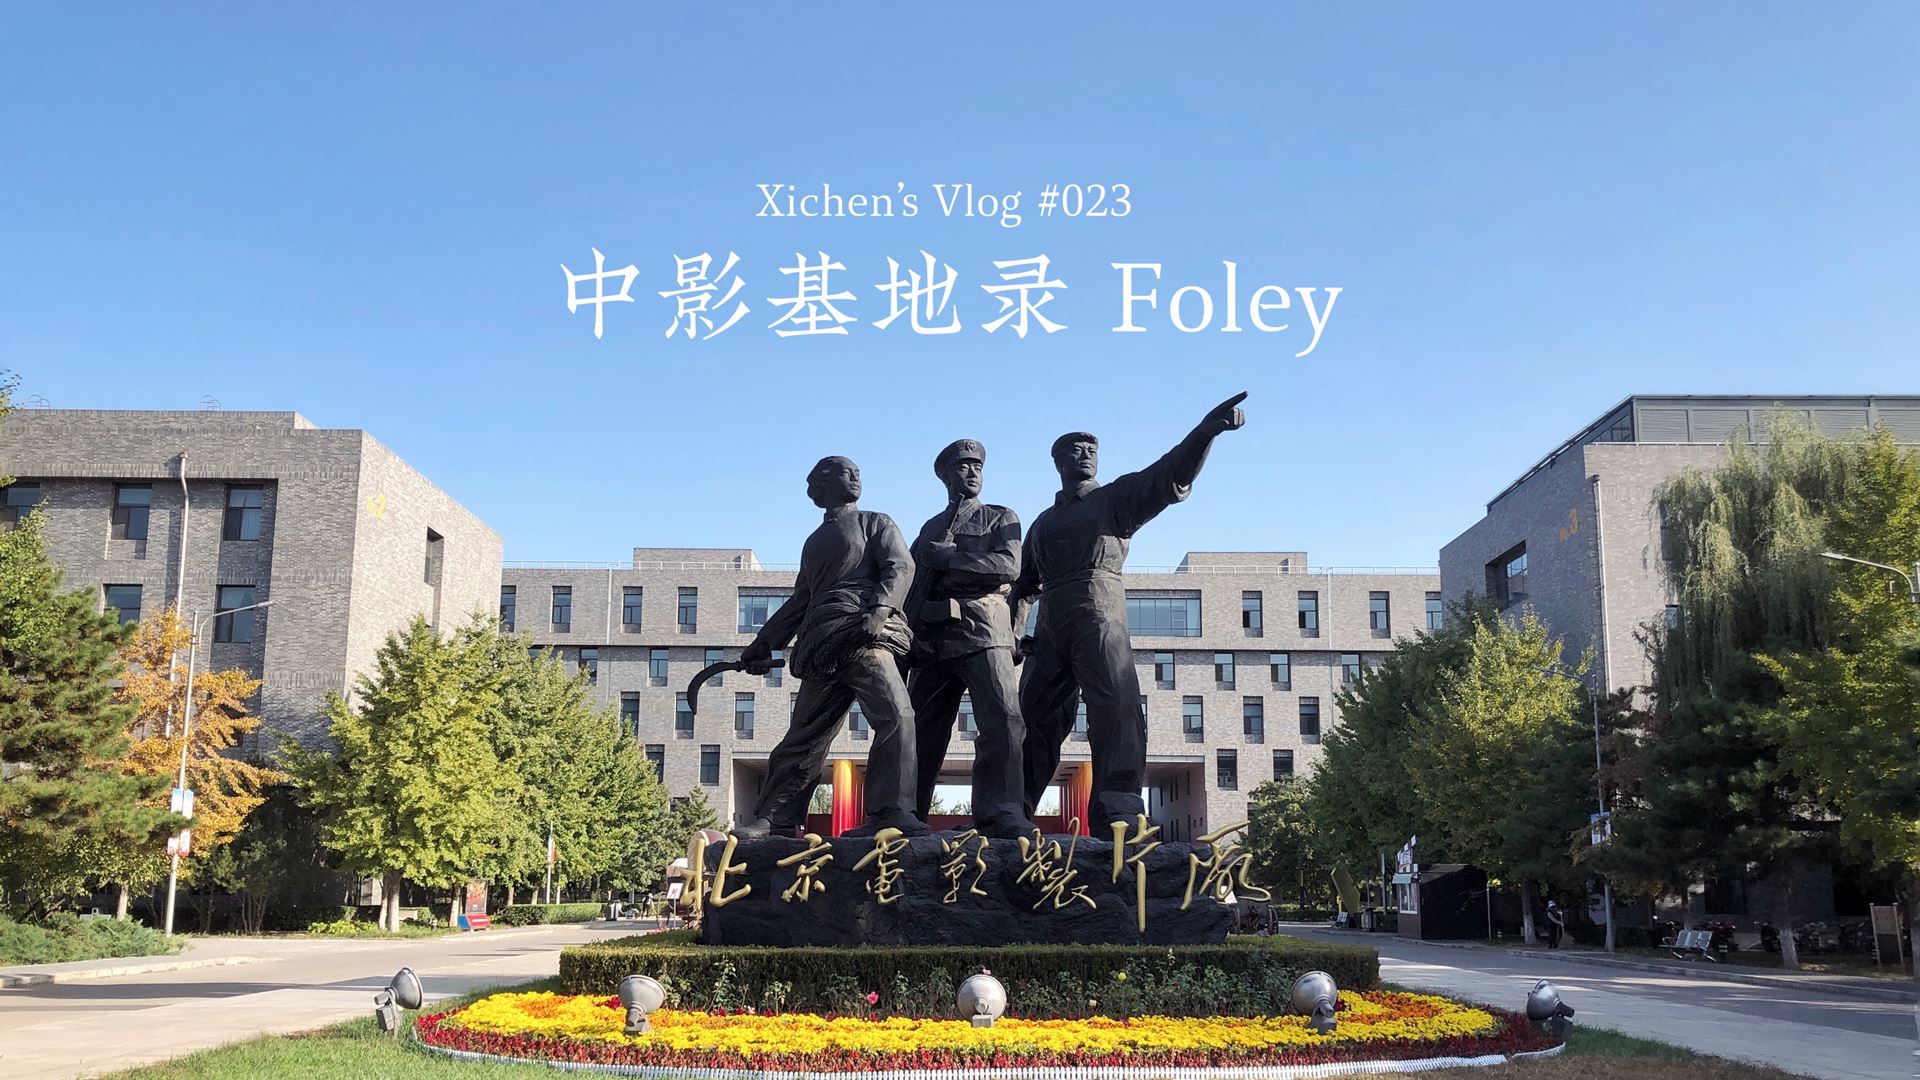 Xichen Vlog 023 Cover